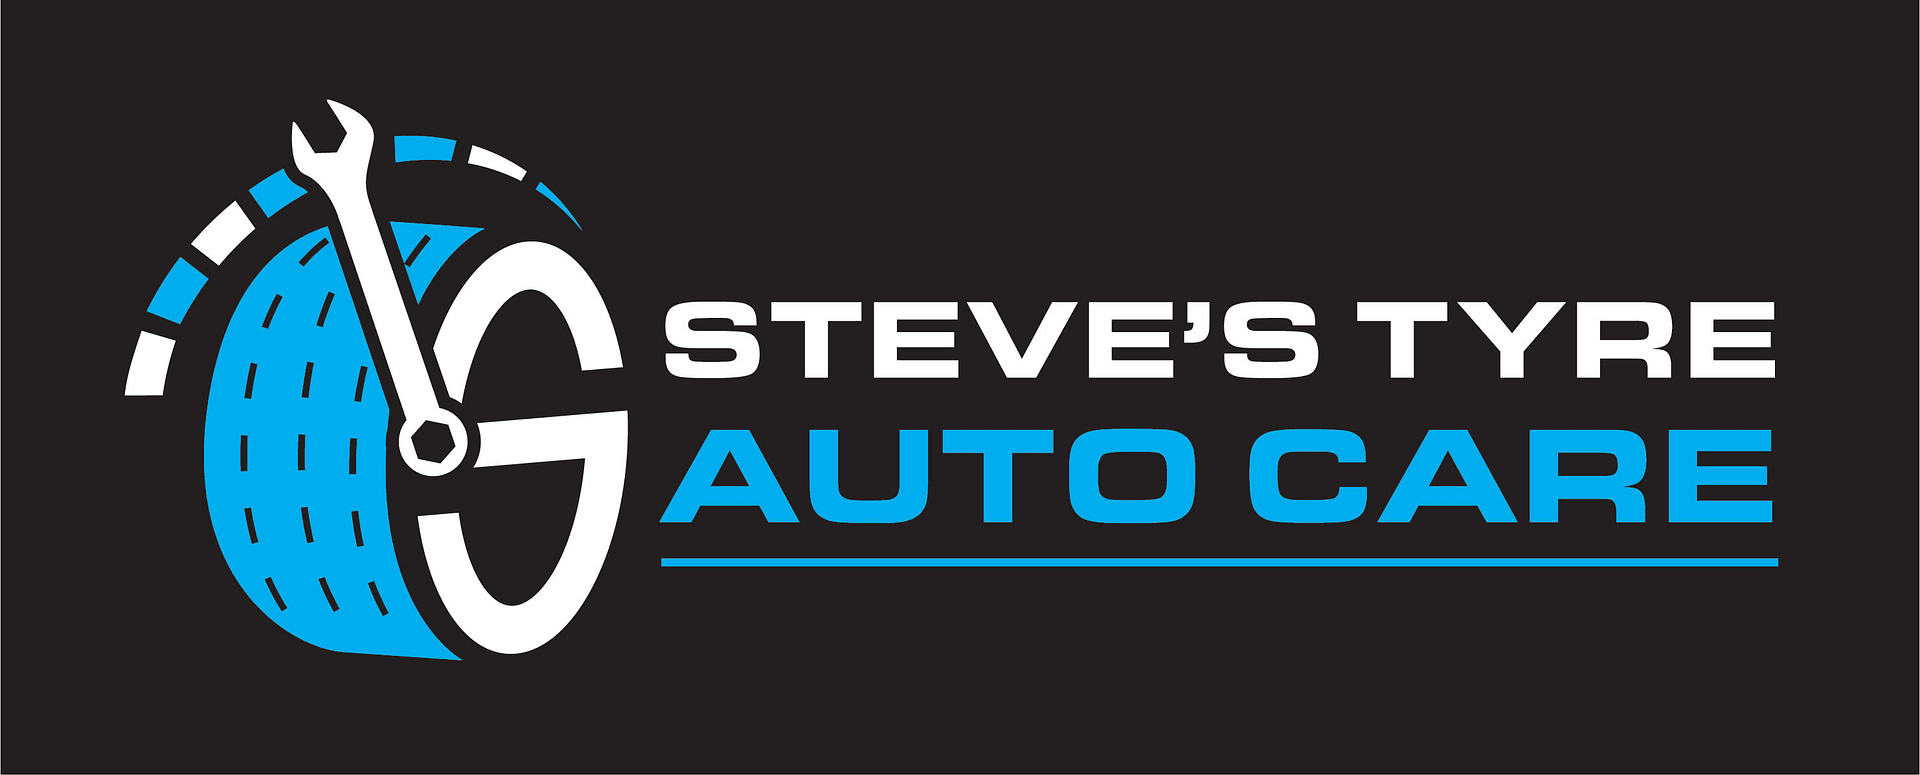 Steve's Tyre Auto Care Logo